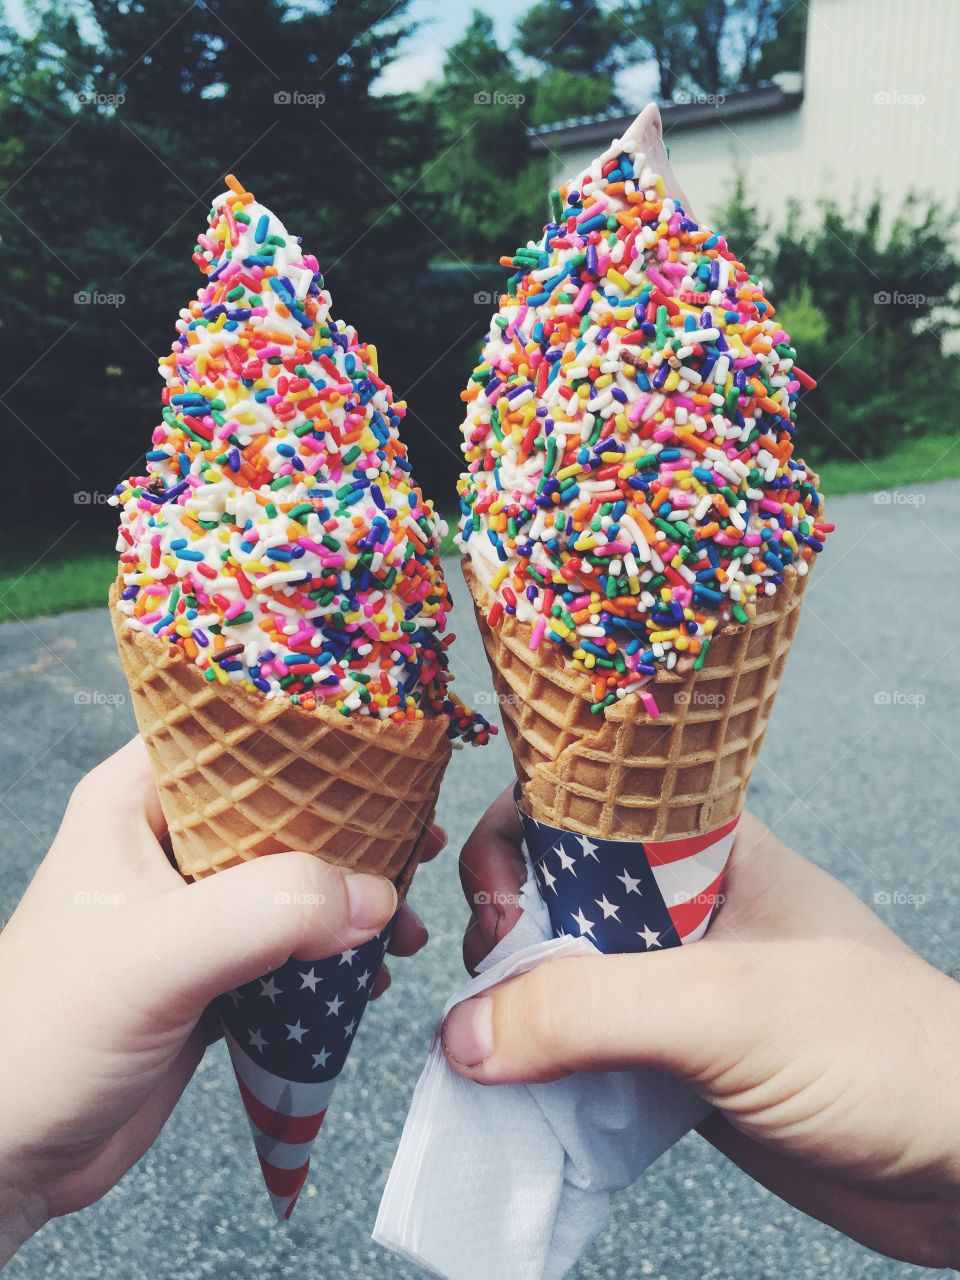 Hands holding delicious ice cream